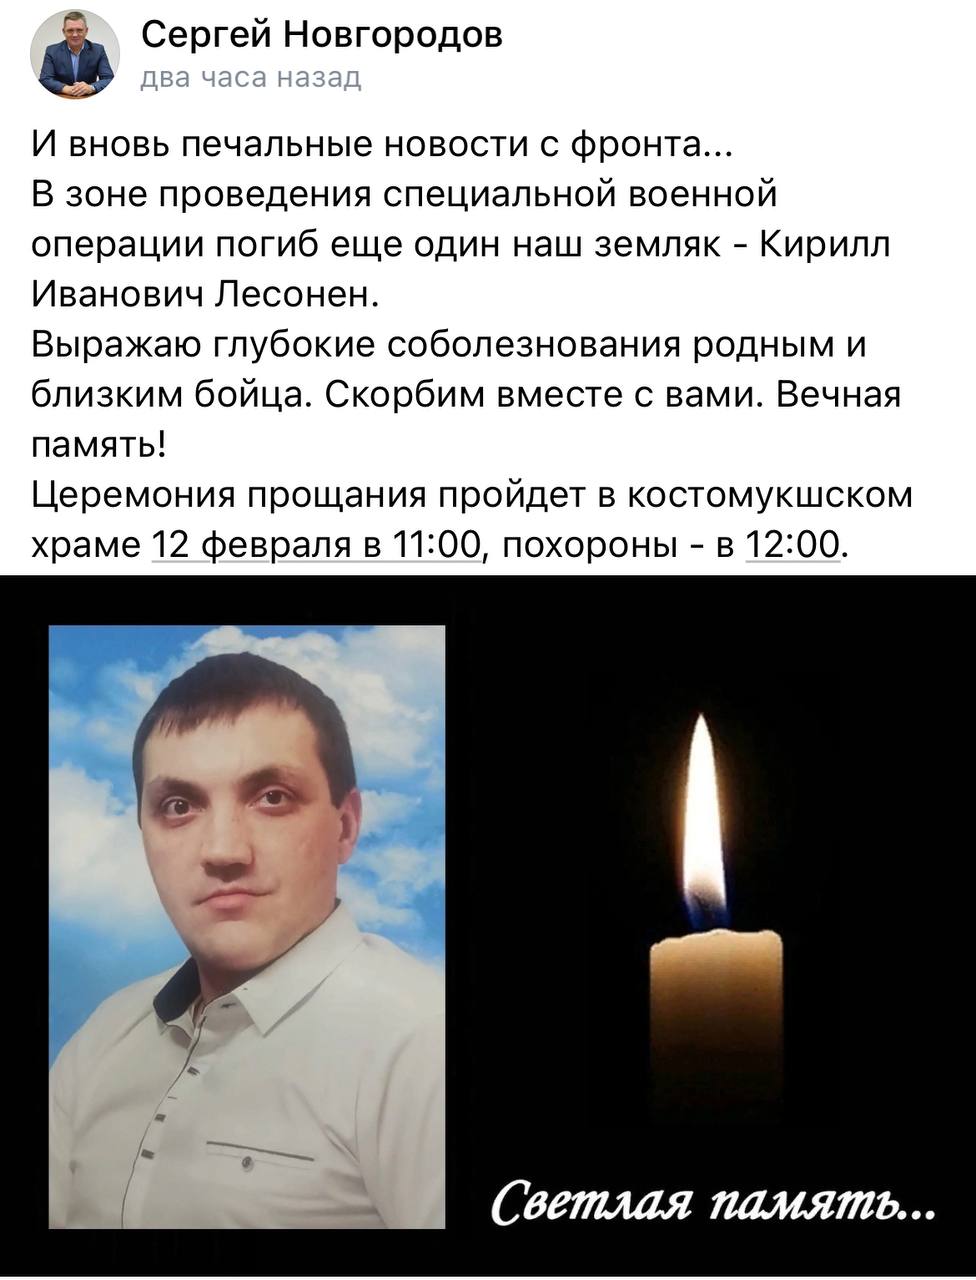 Лесонен Кирилл Иванович погиб 12.02.2024 из региона Карелия, г. Костомукша